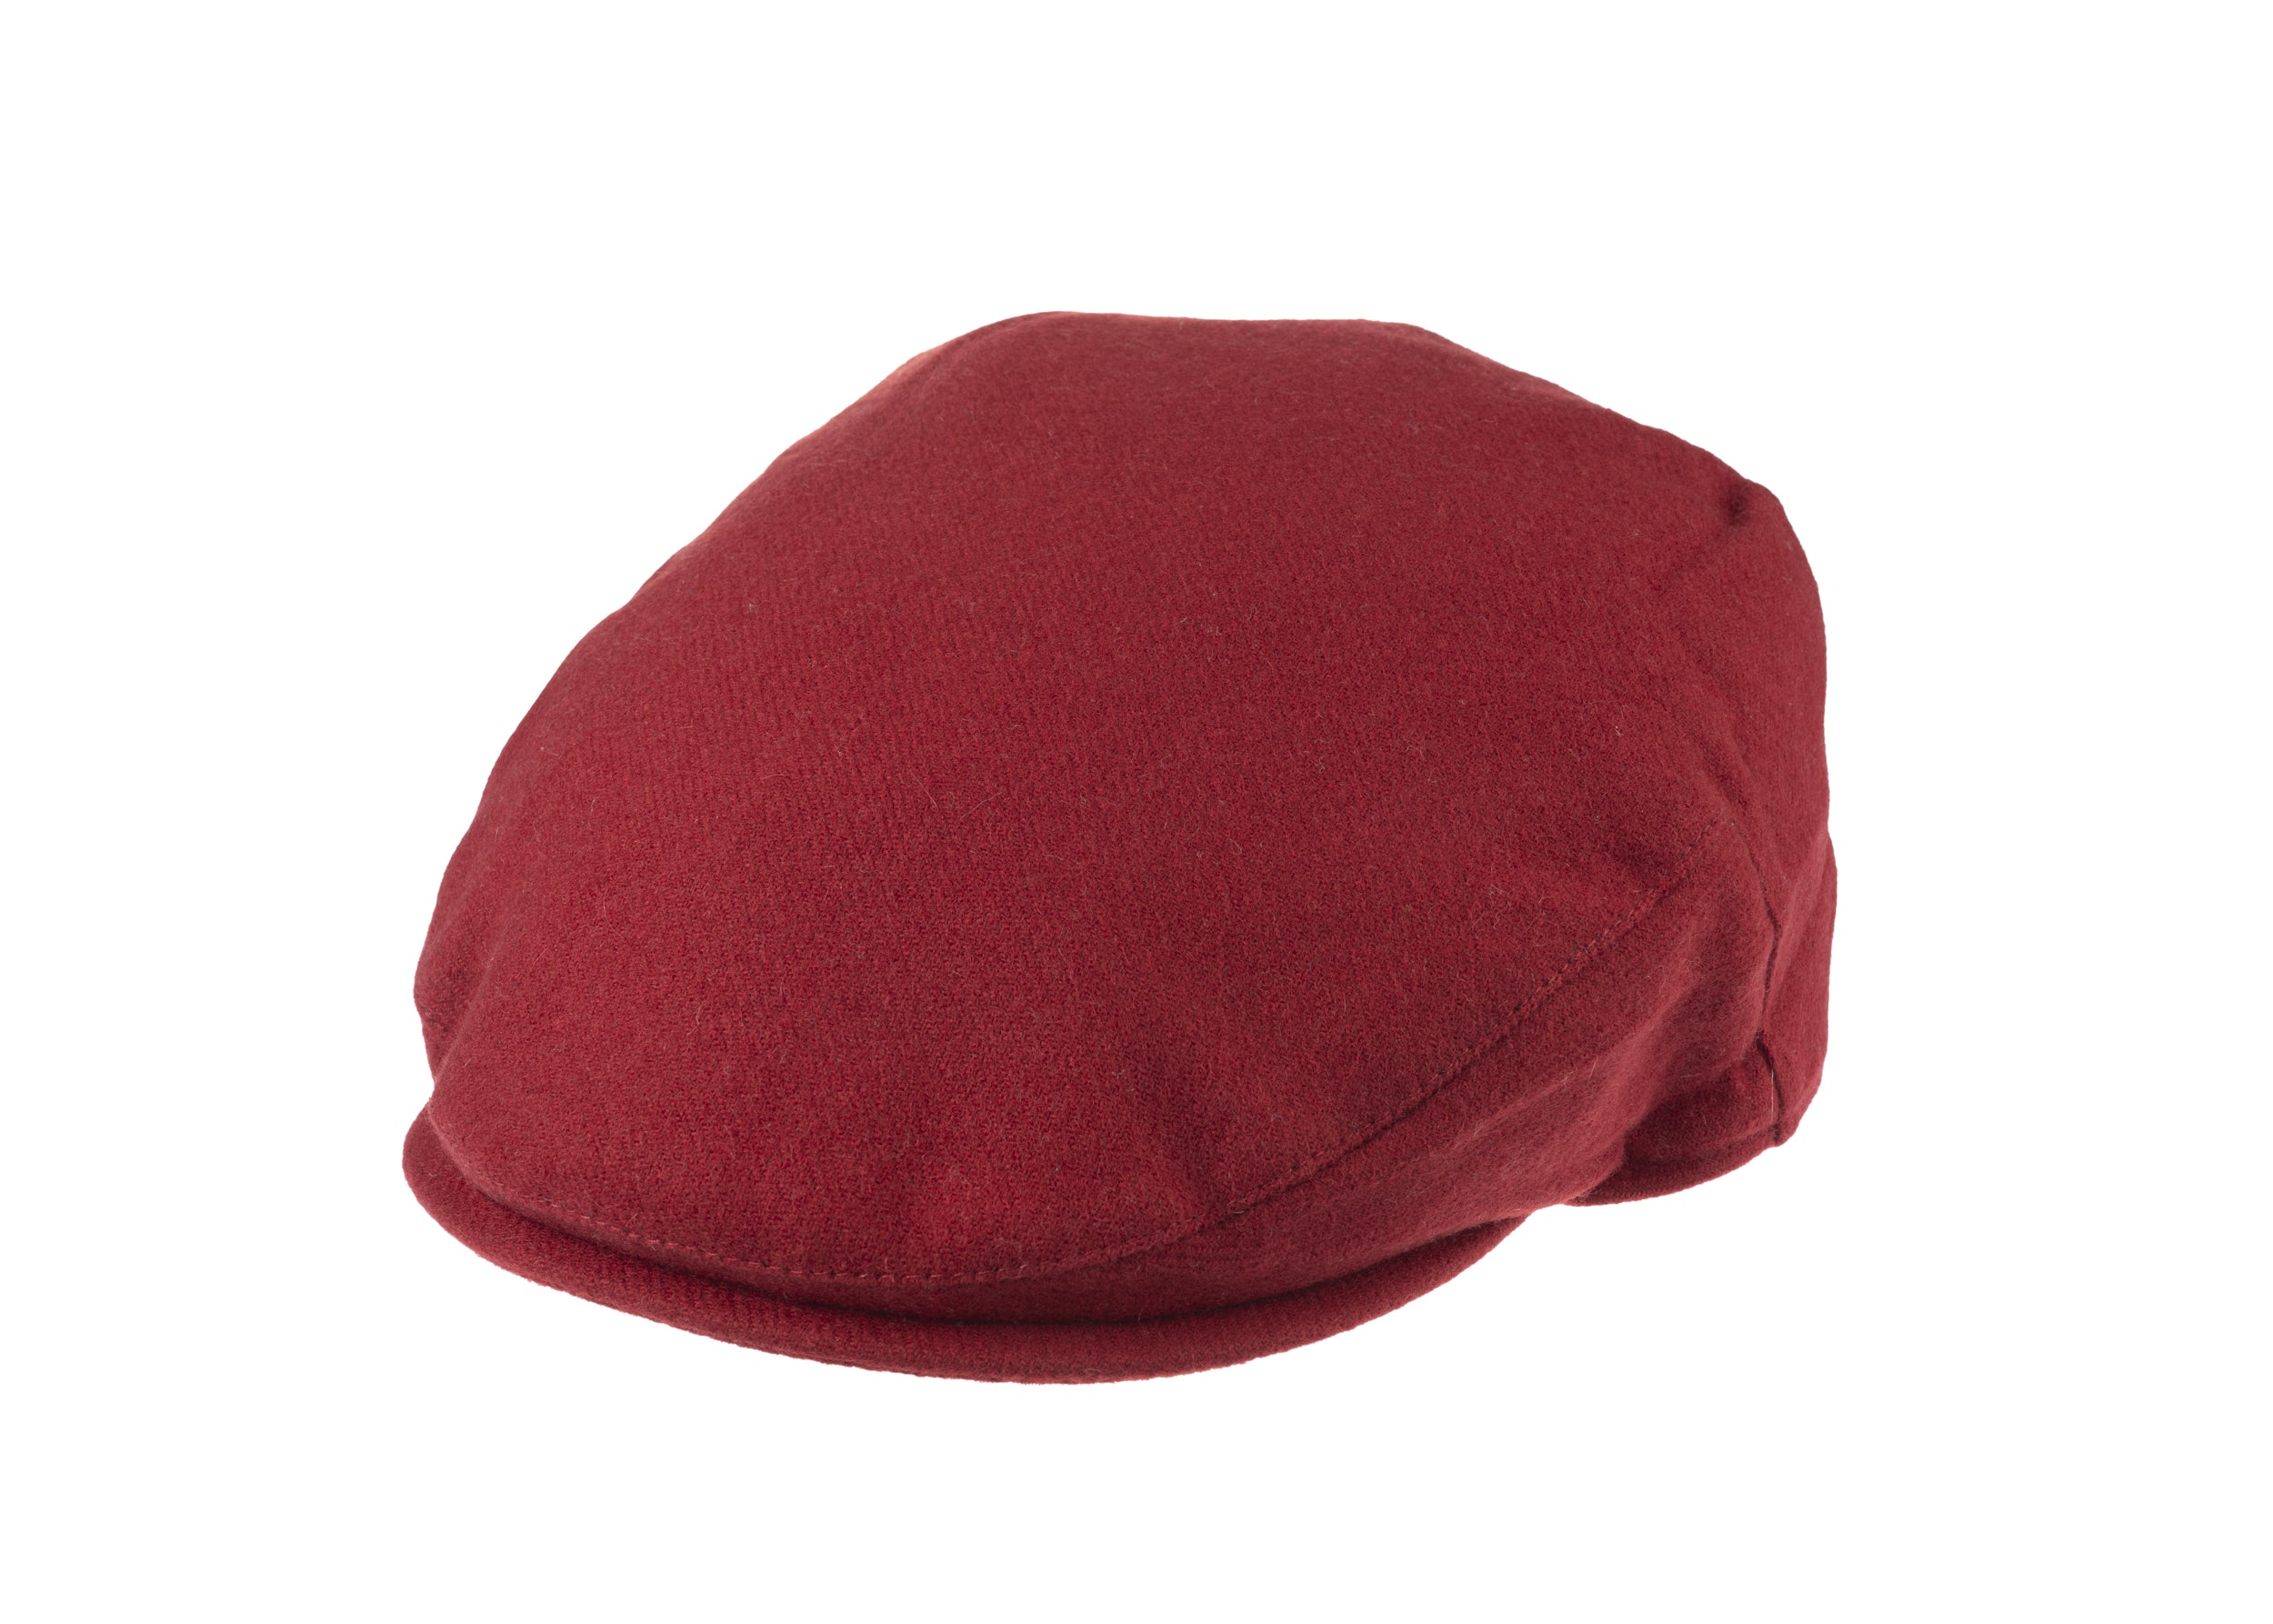 Josh balmoral flat cap in cashmere/wool blend fabric in Red